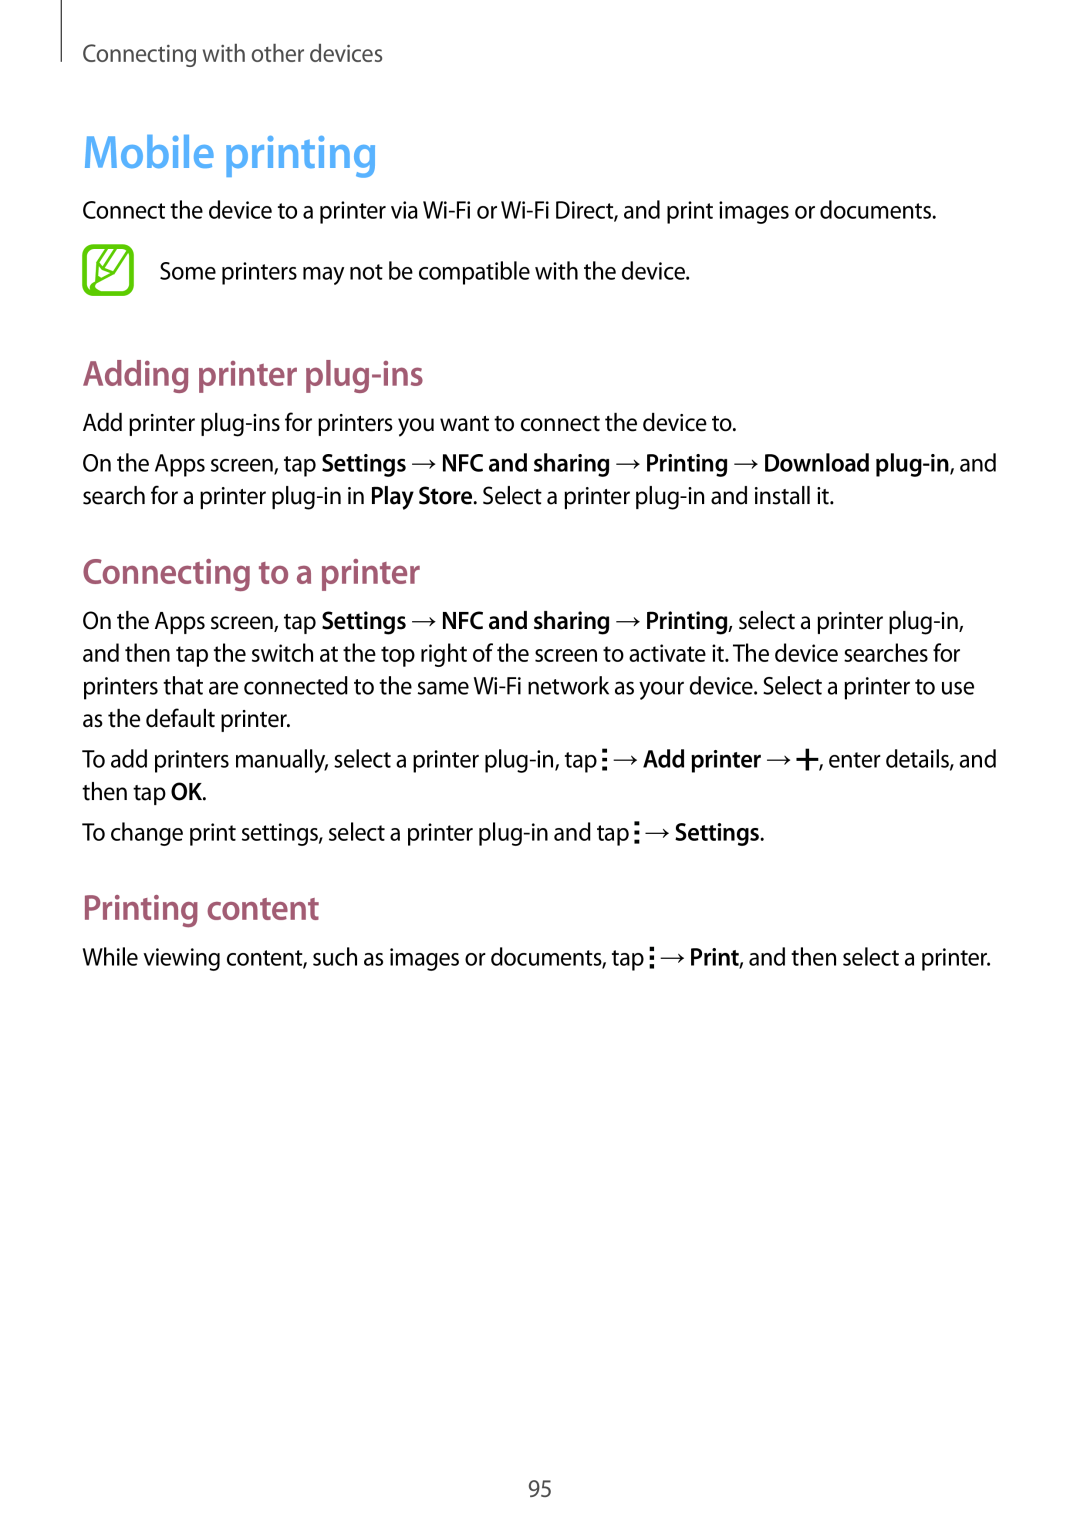 Samsung SM-A300FZKUOMN, SM-A300FZDDSEE Mobile printing, Adding printer plug-ins, Connecting to a printer, Printing content 